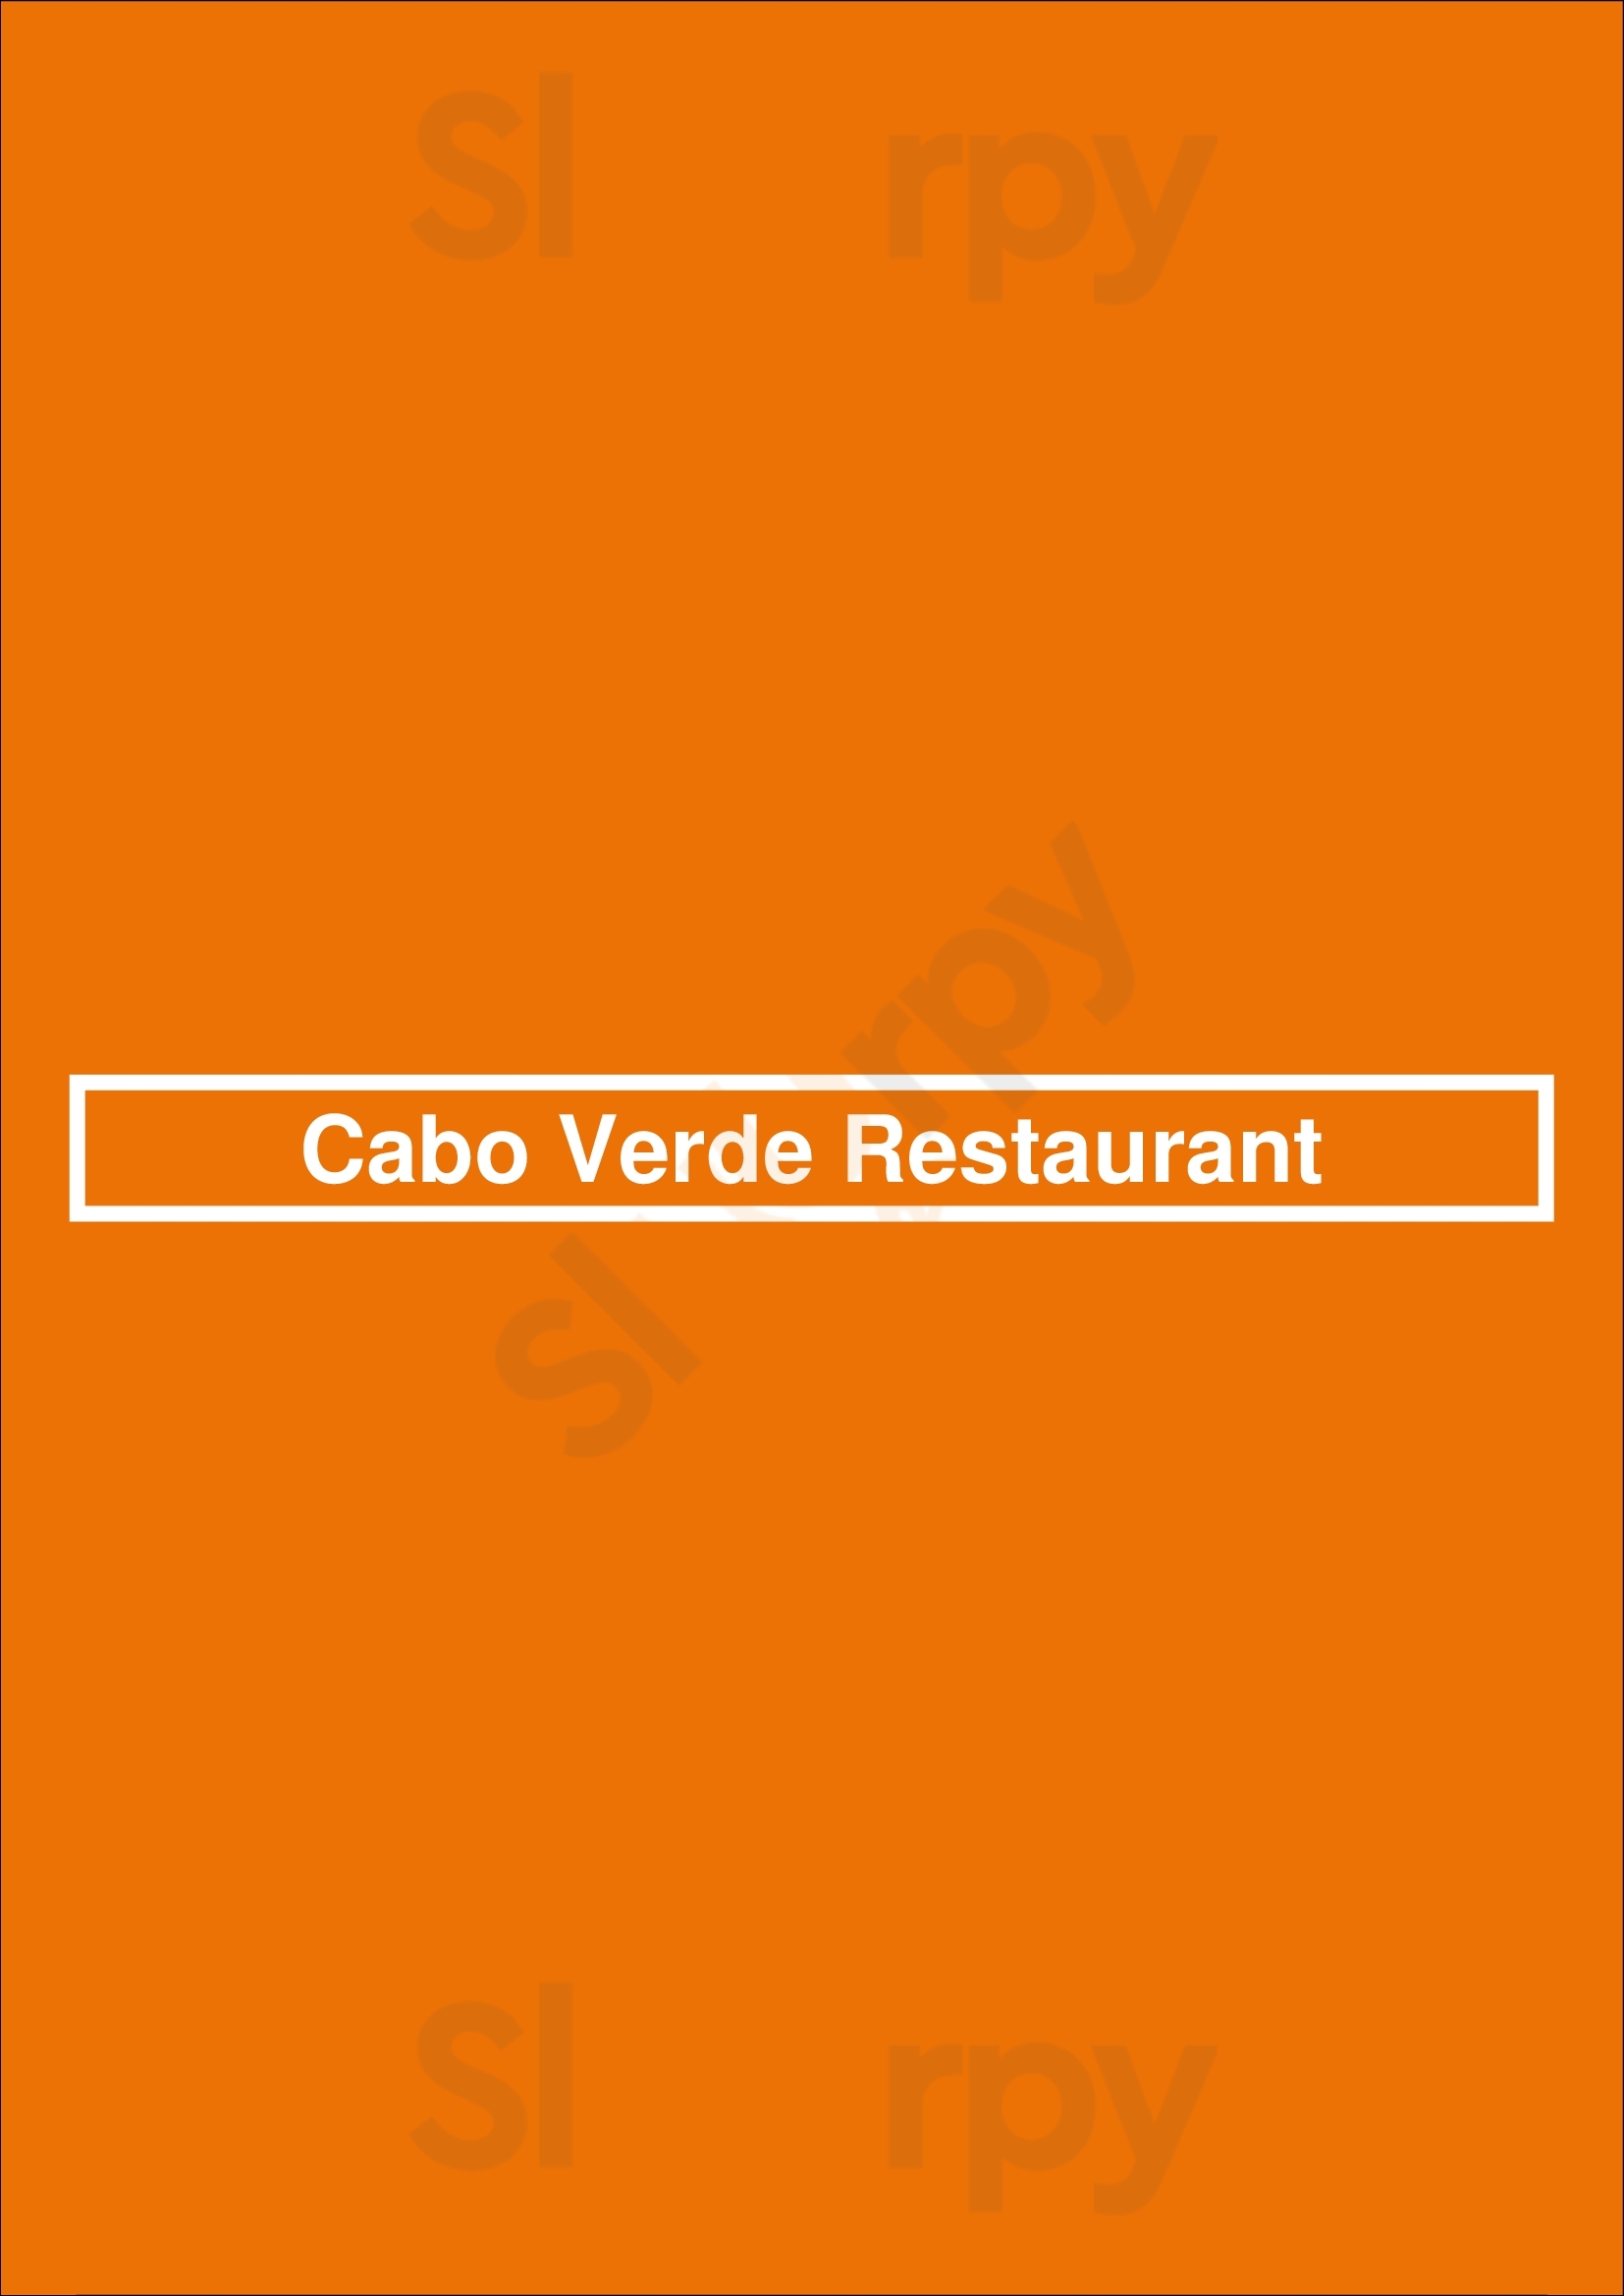 Cabo Verde Restaurant Anvers Menu - 1